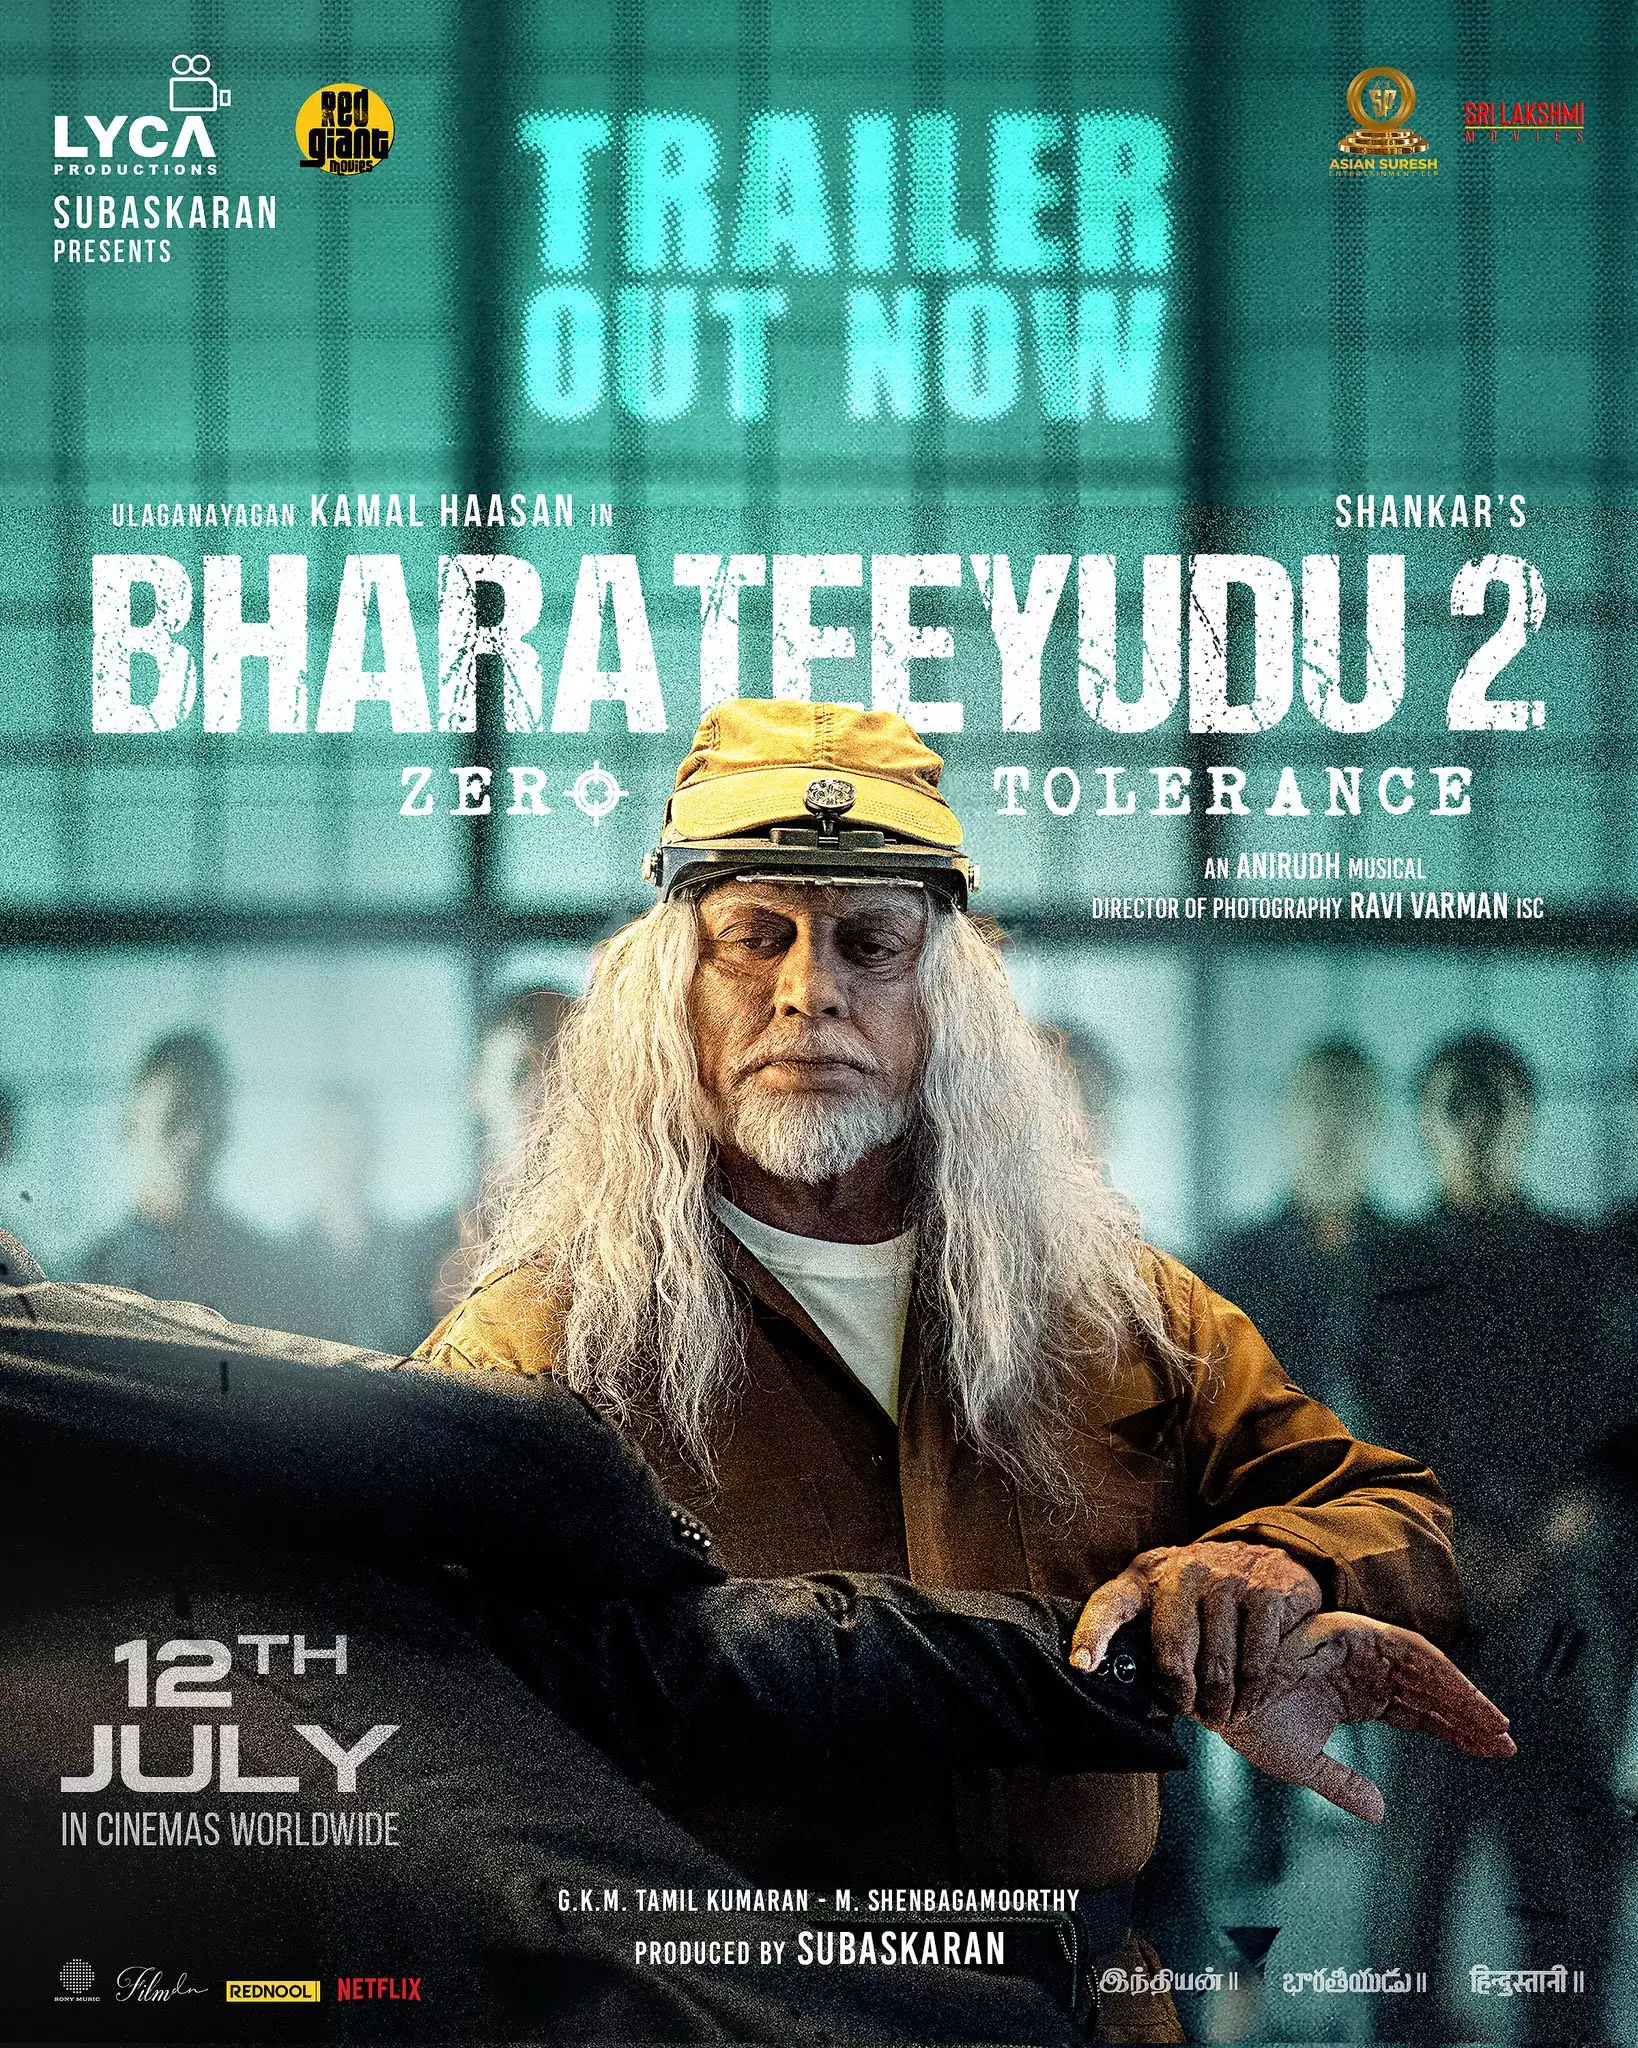 Kamal Haasan Proves his Power as Senapathy in Bharateeyudu 2 trailer